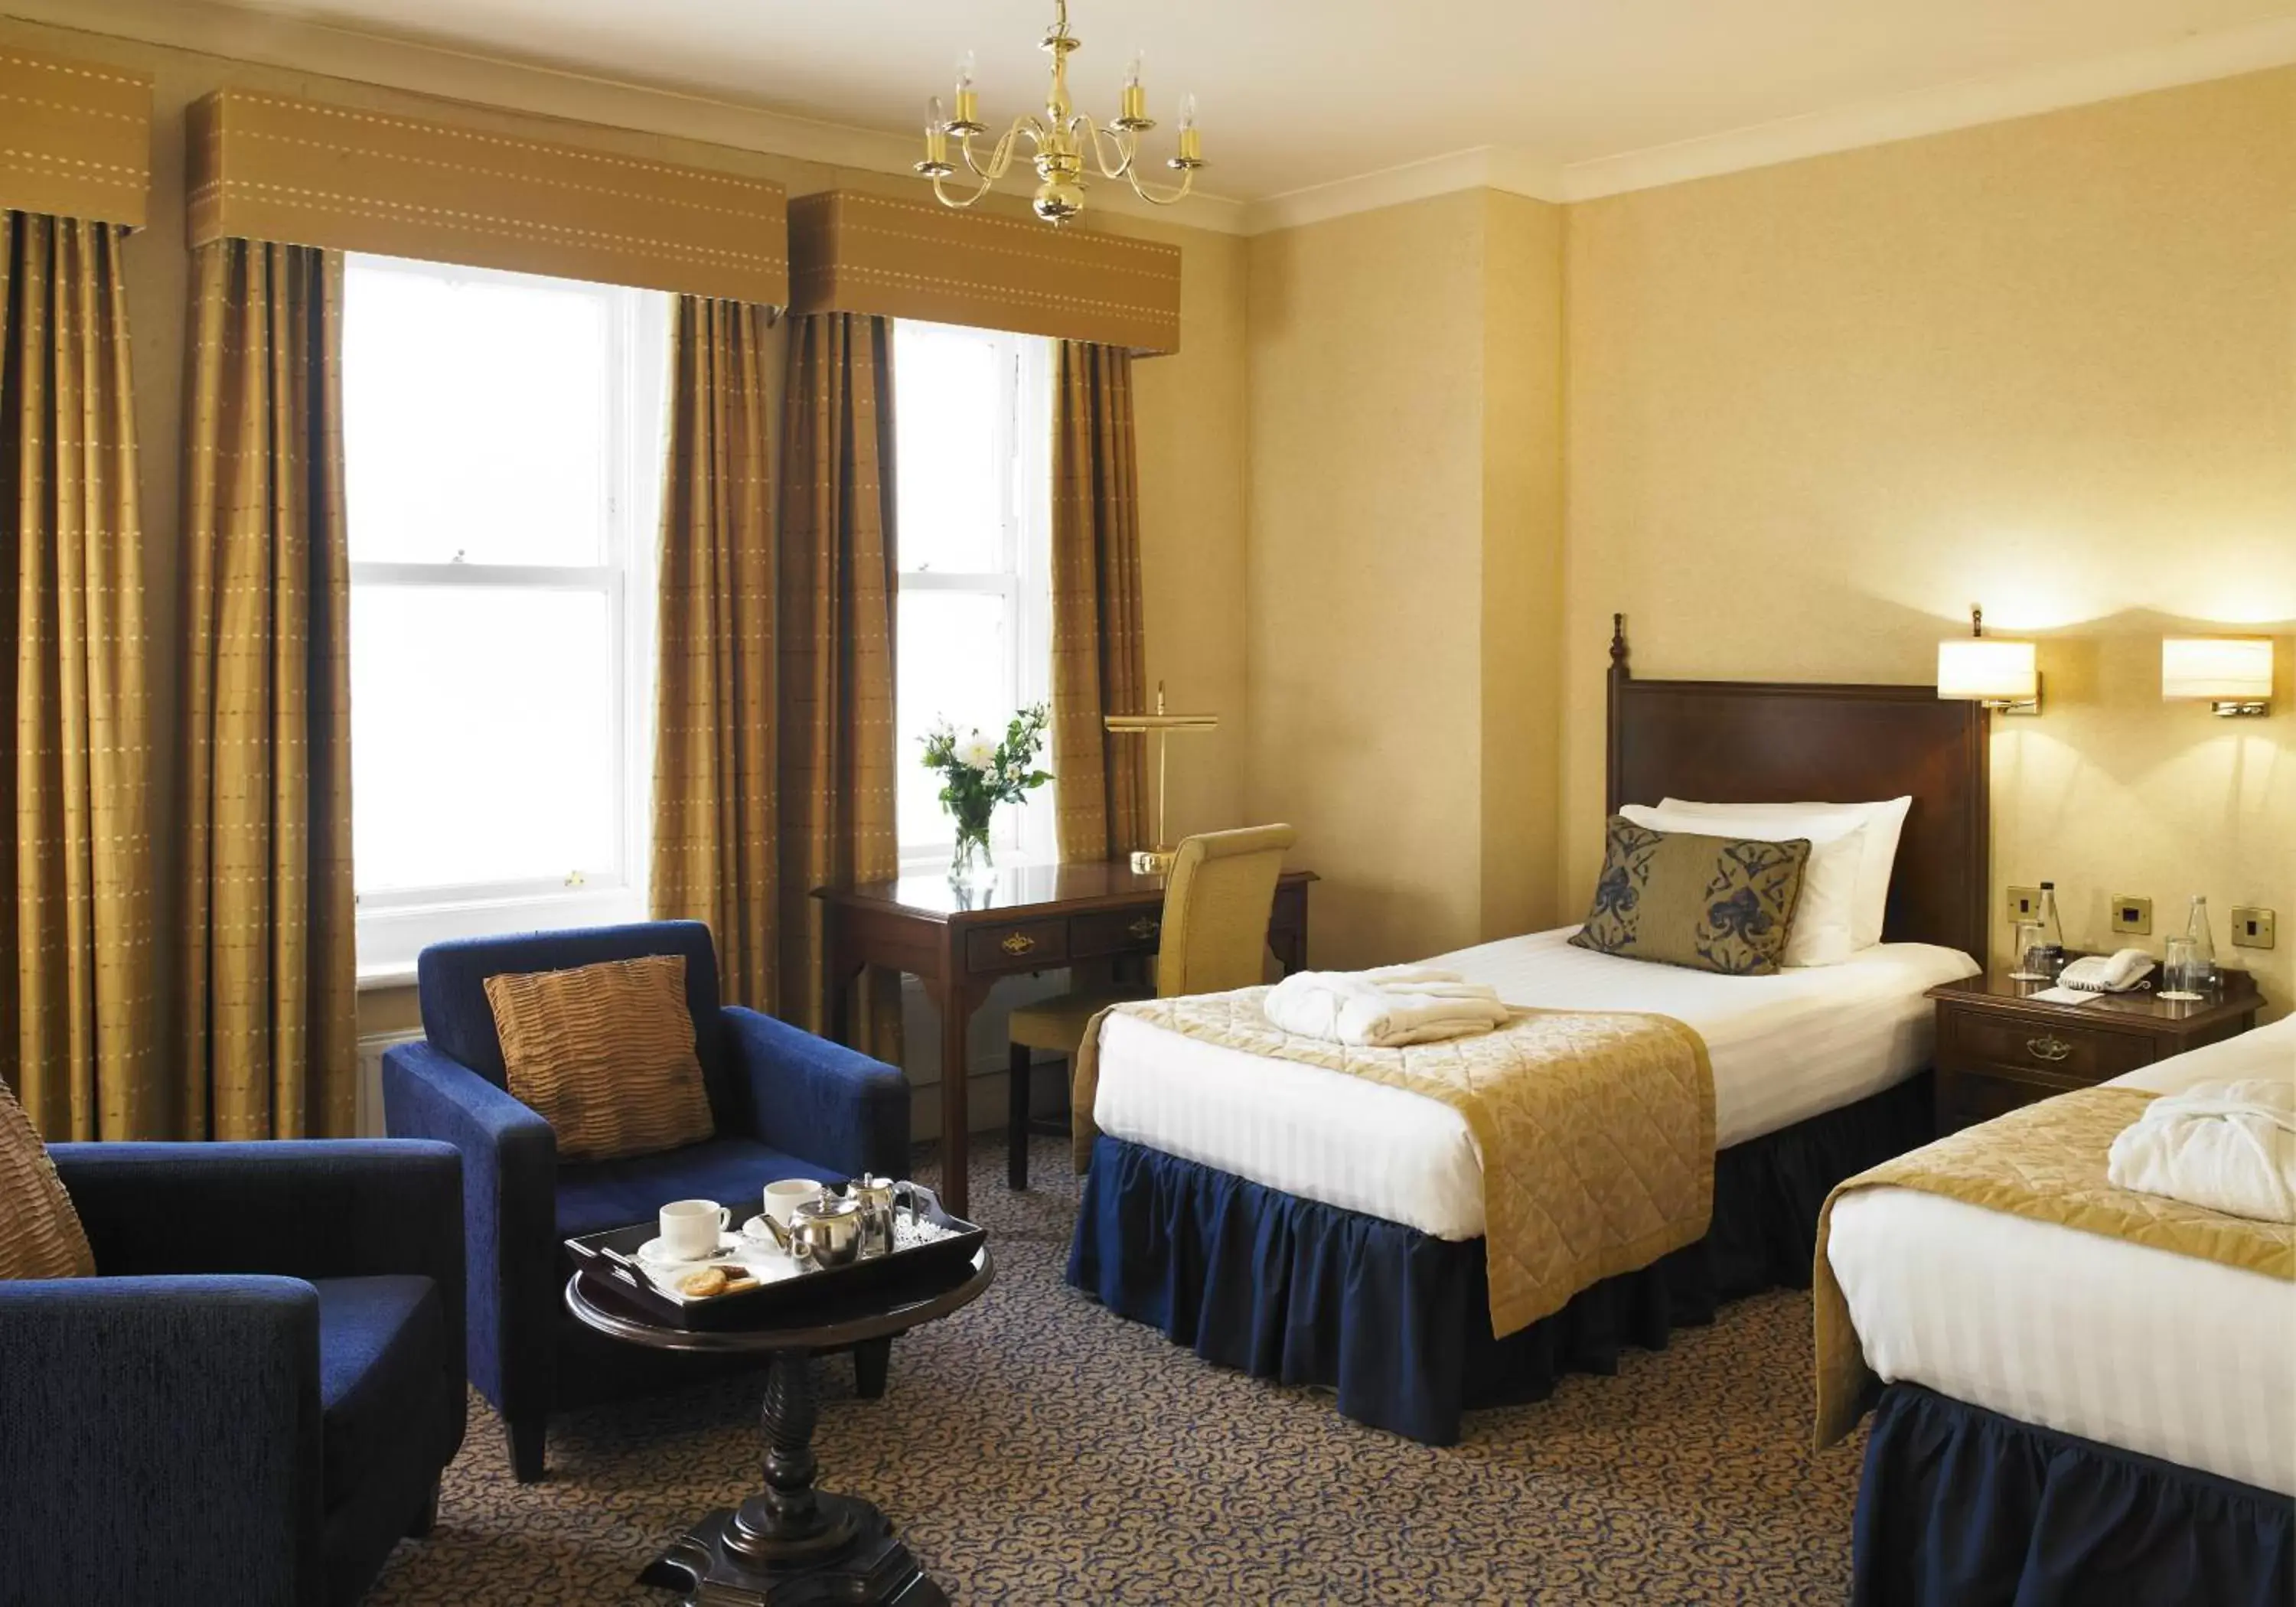 Bedroom, Room Photo in Imperial Hotel Blackpool